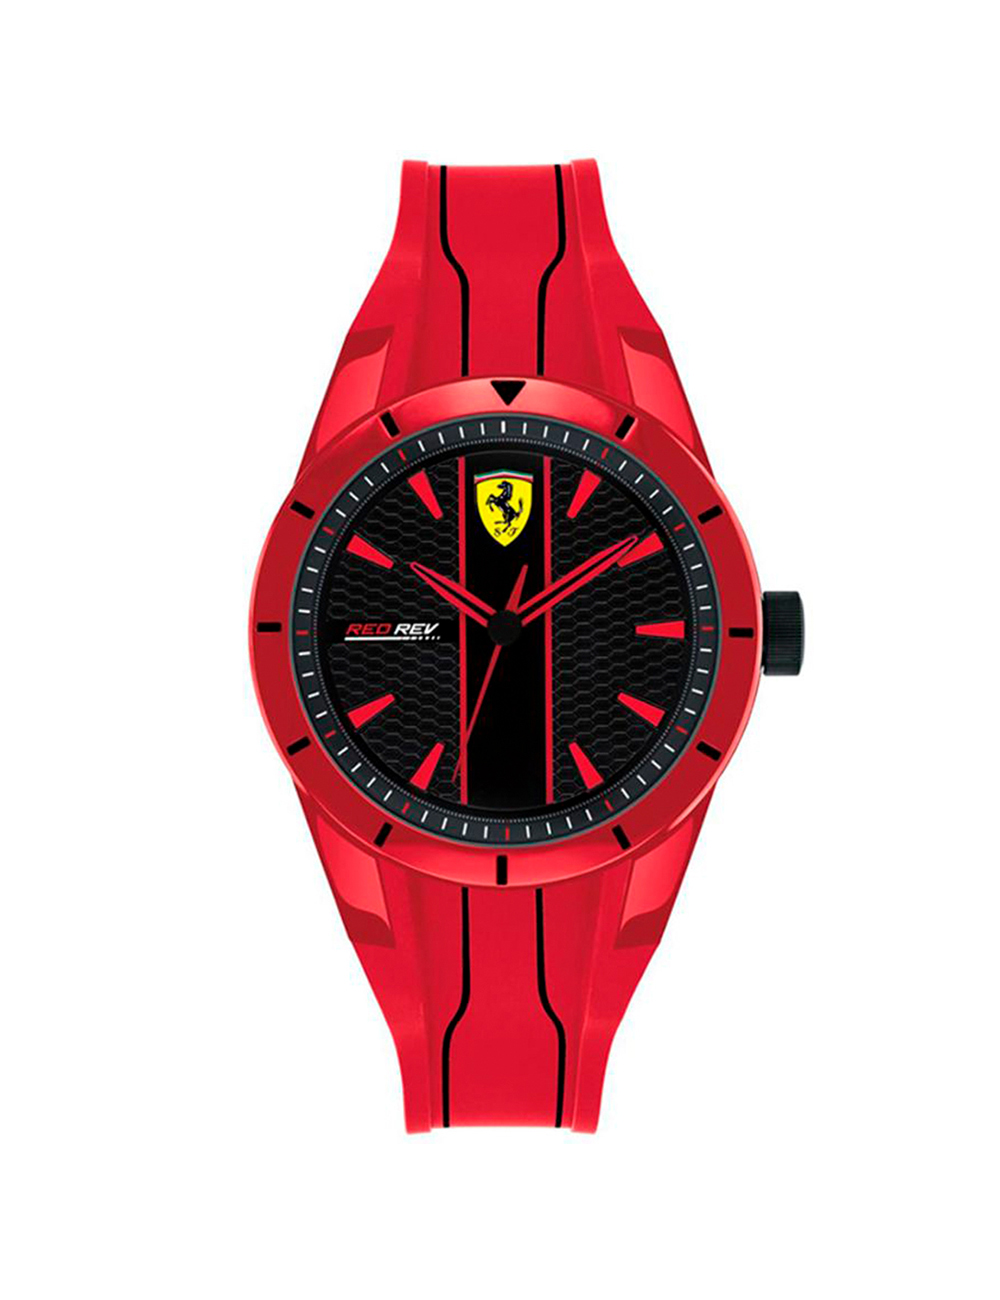 Ferrari часов. Часы Scuderia Ferrari Red. Часы Ferrari Scuderia 0830245. Scuderia Ferrari часы мужские. Ferrari Scuderia Ferrari Red часы мужские.